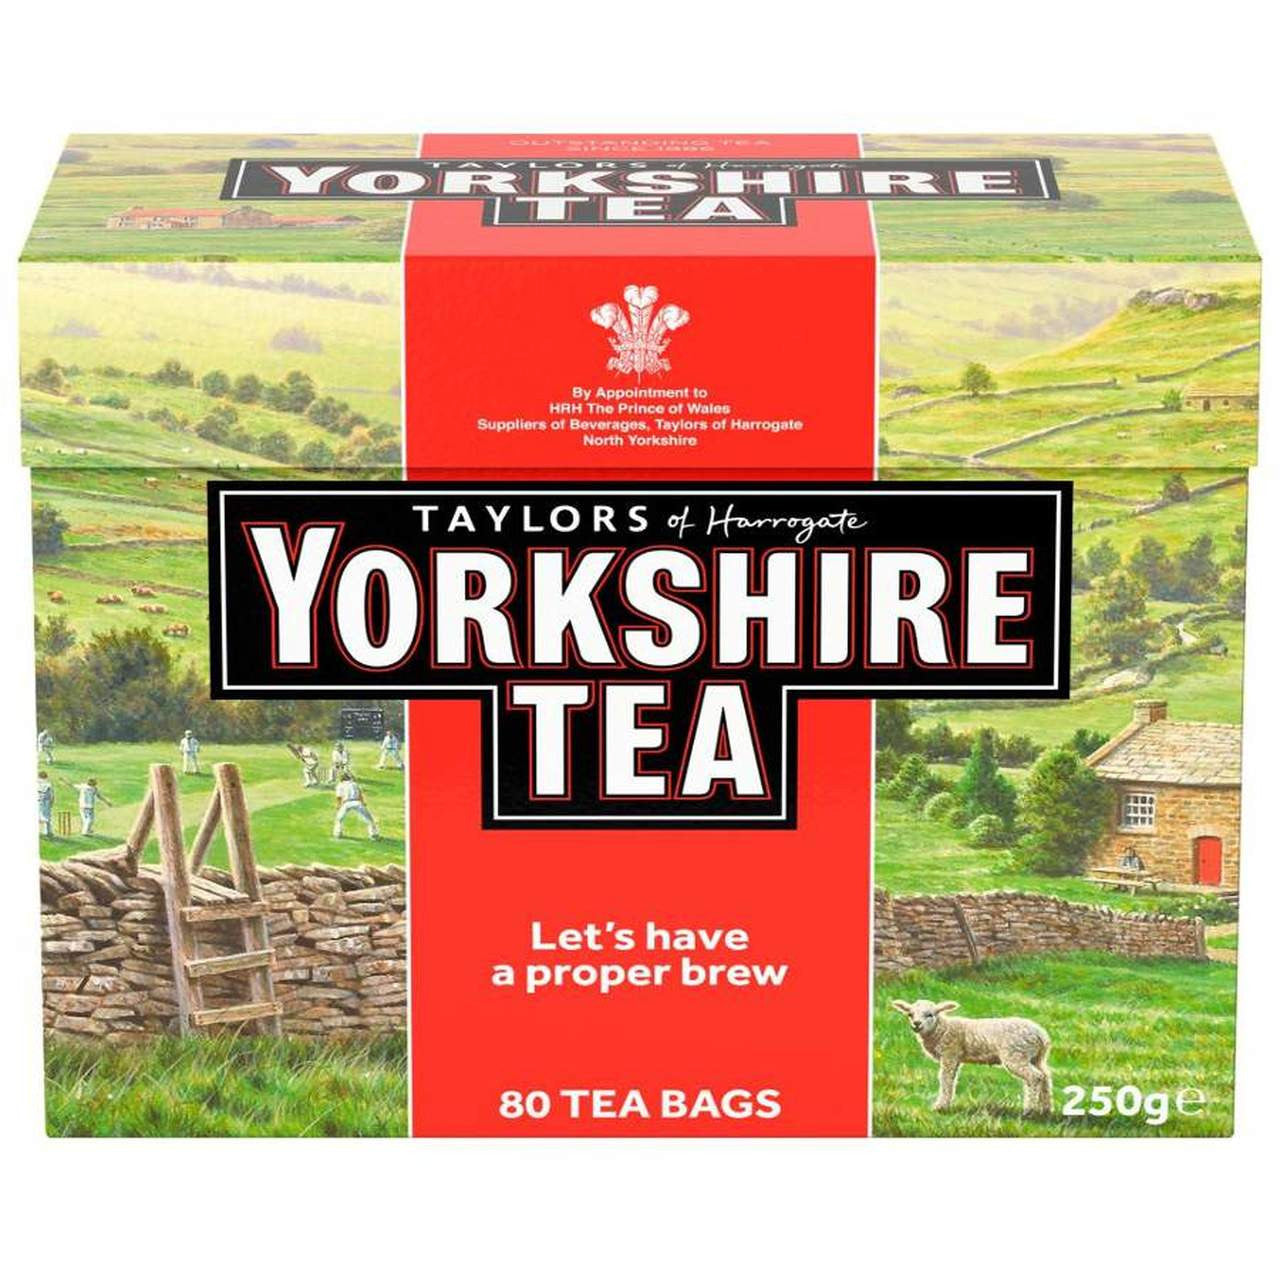 Yorkshire Tea Teabags. 80 ct.